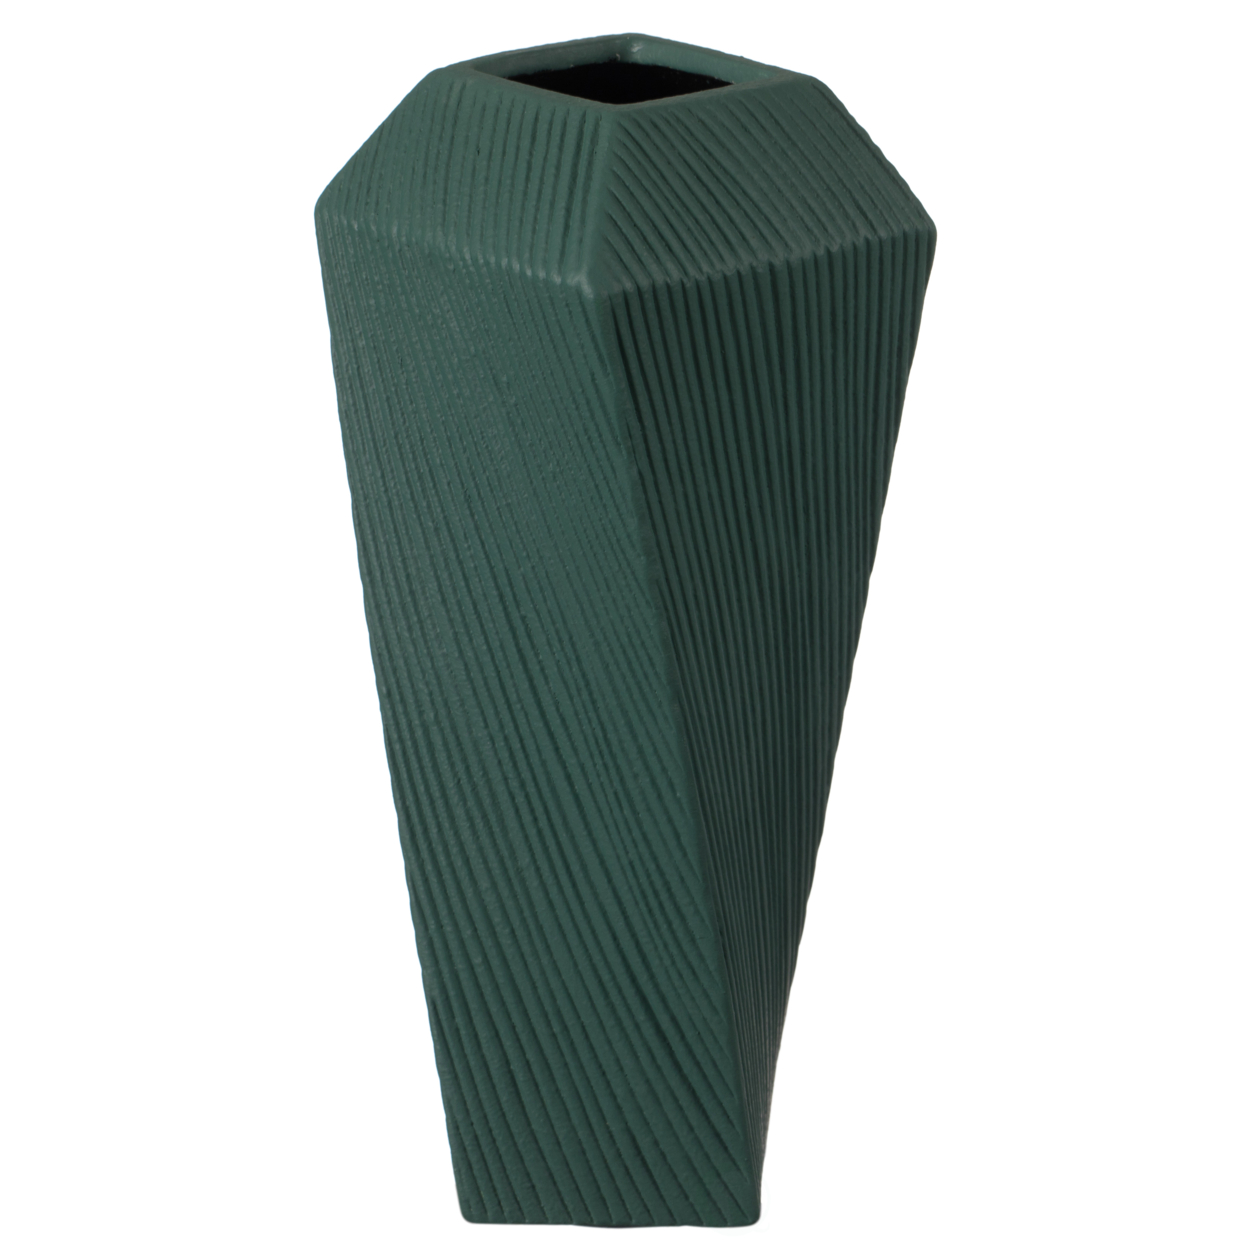 Decorative Ceramic Square Twisted Centerpiece Table Vase - Multi